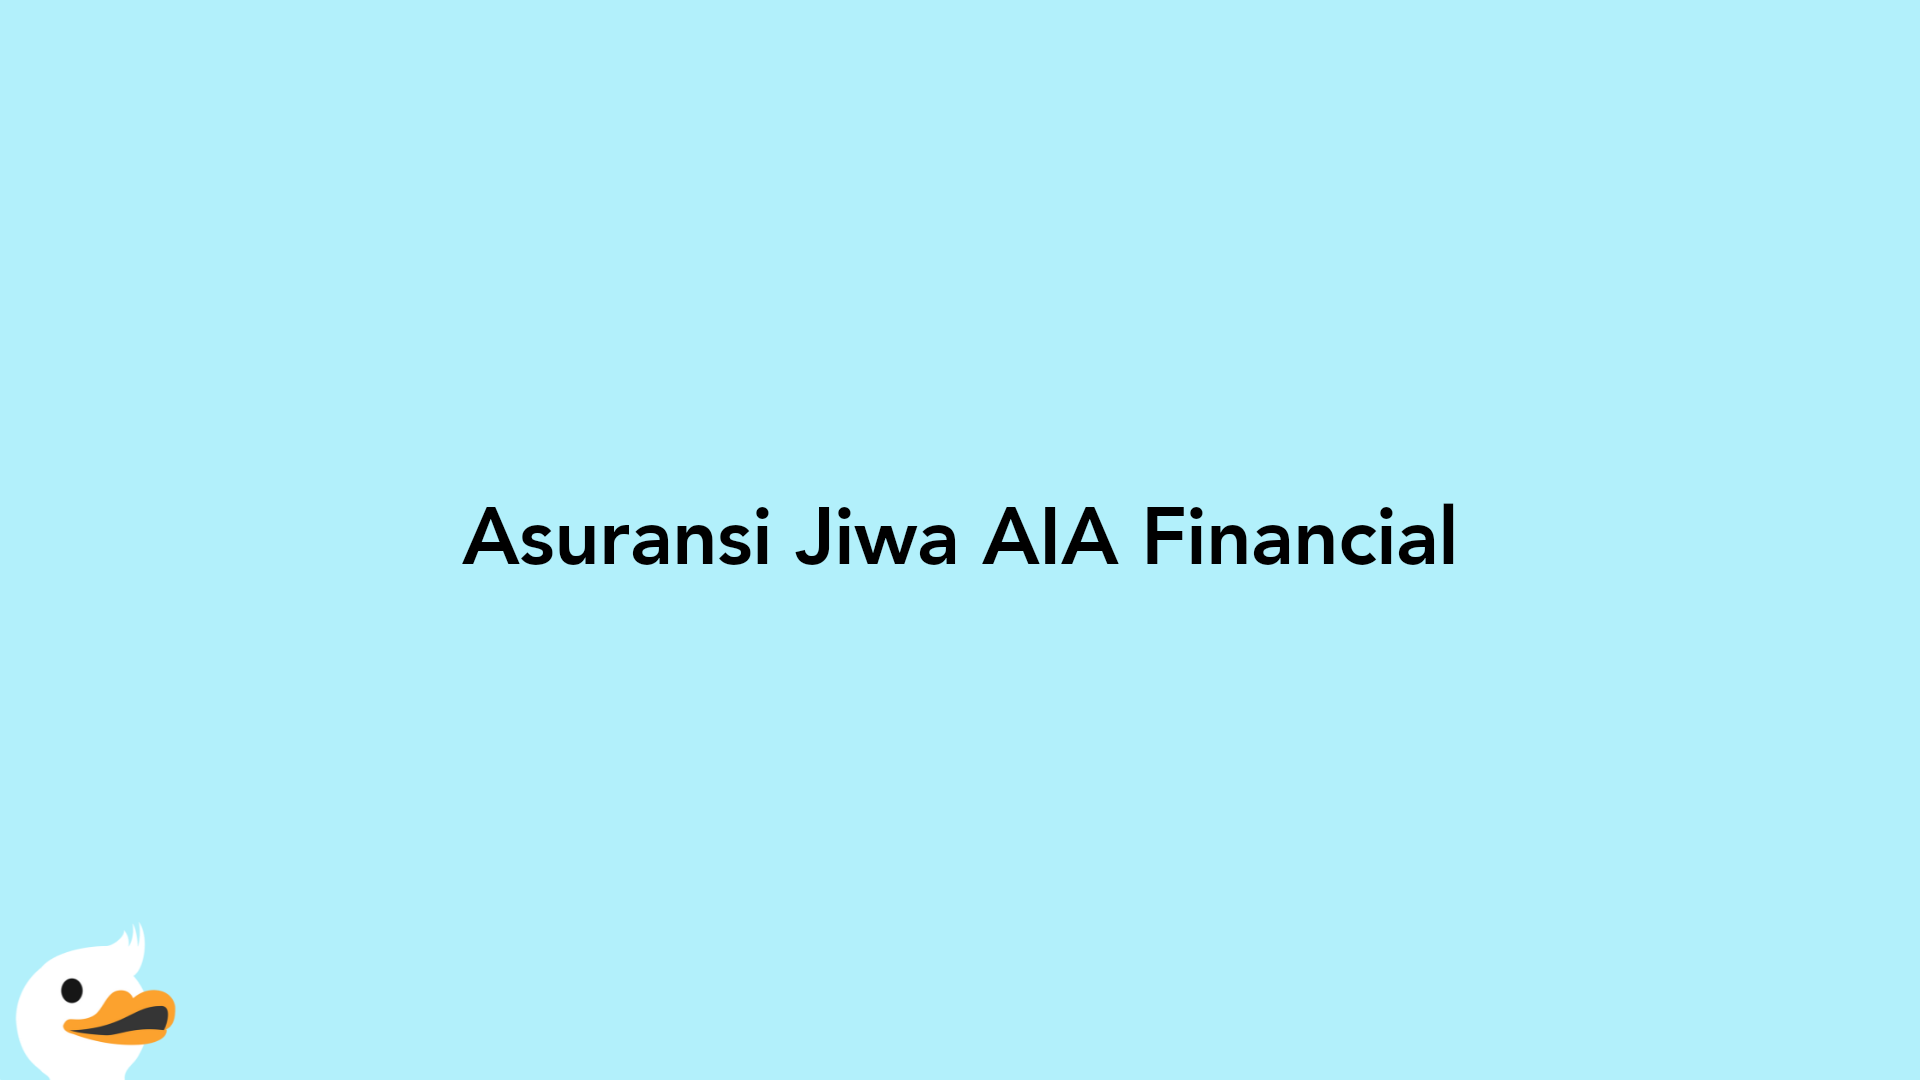 Asuransi Jiwa AIA Financial